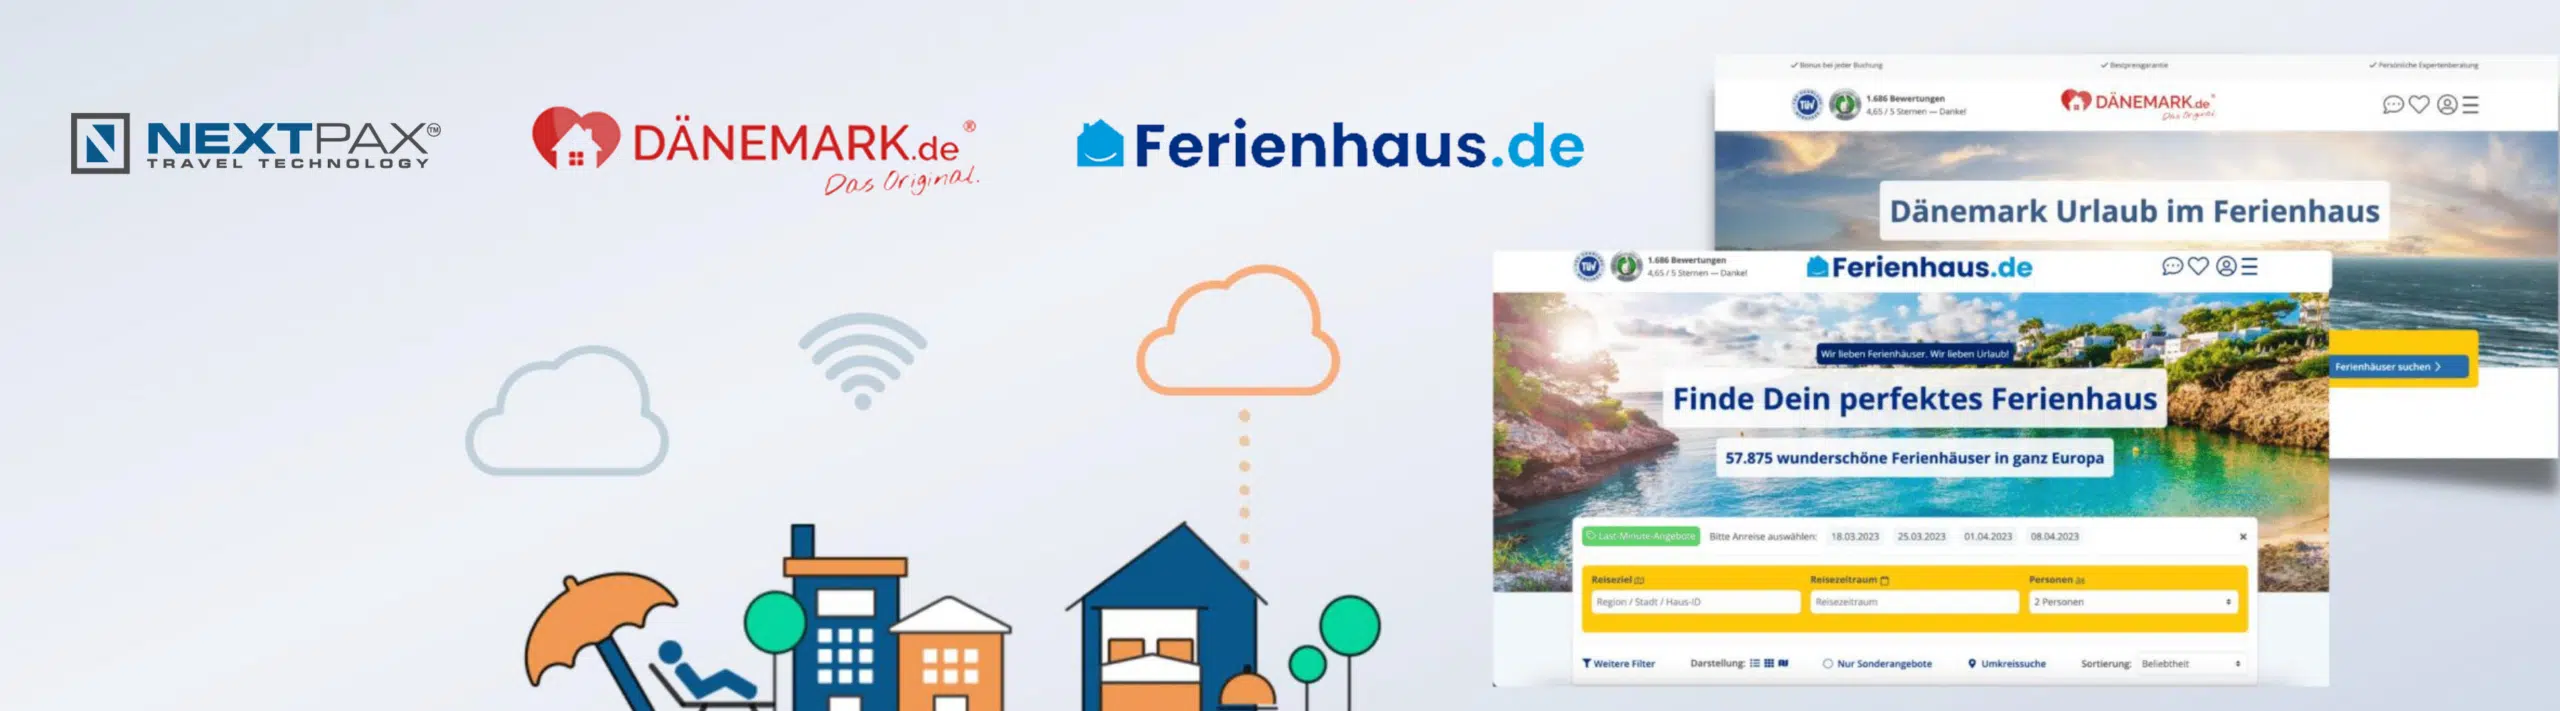 Daenemark.de and Ferienhaus.de Join the NextPax Distribution Network